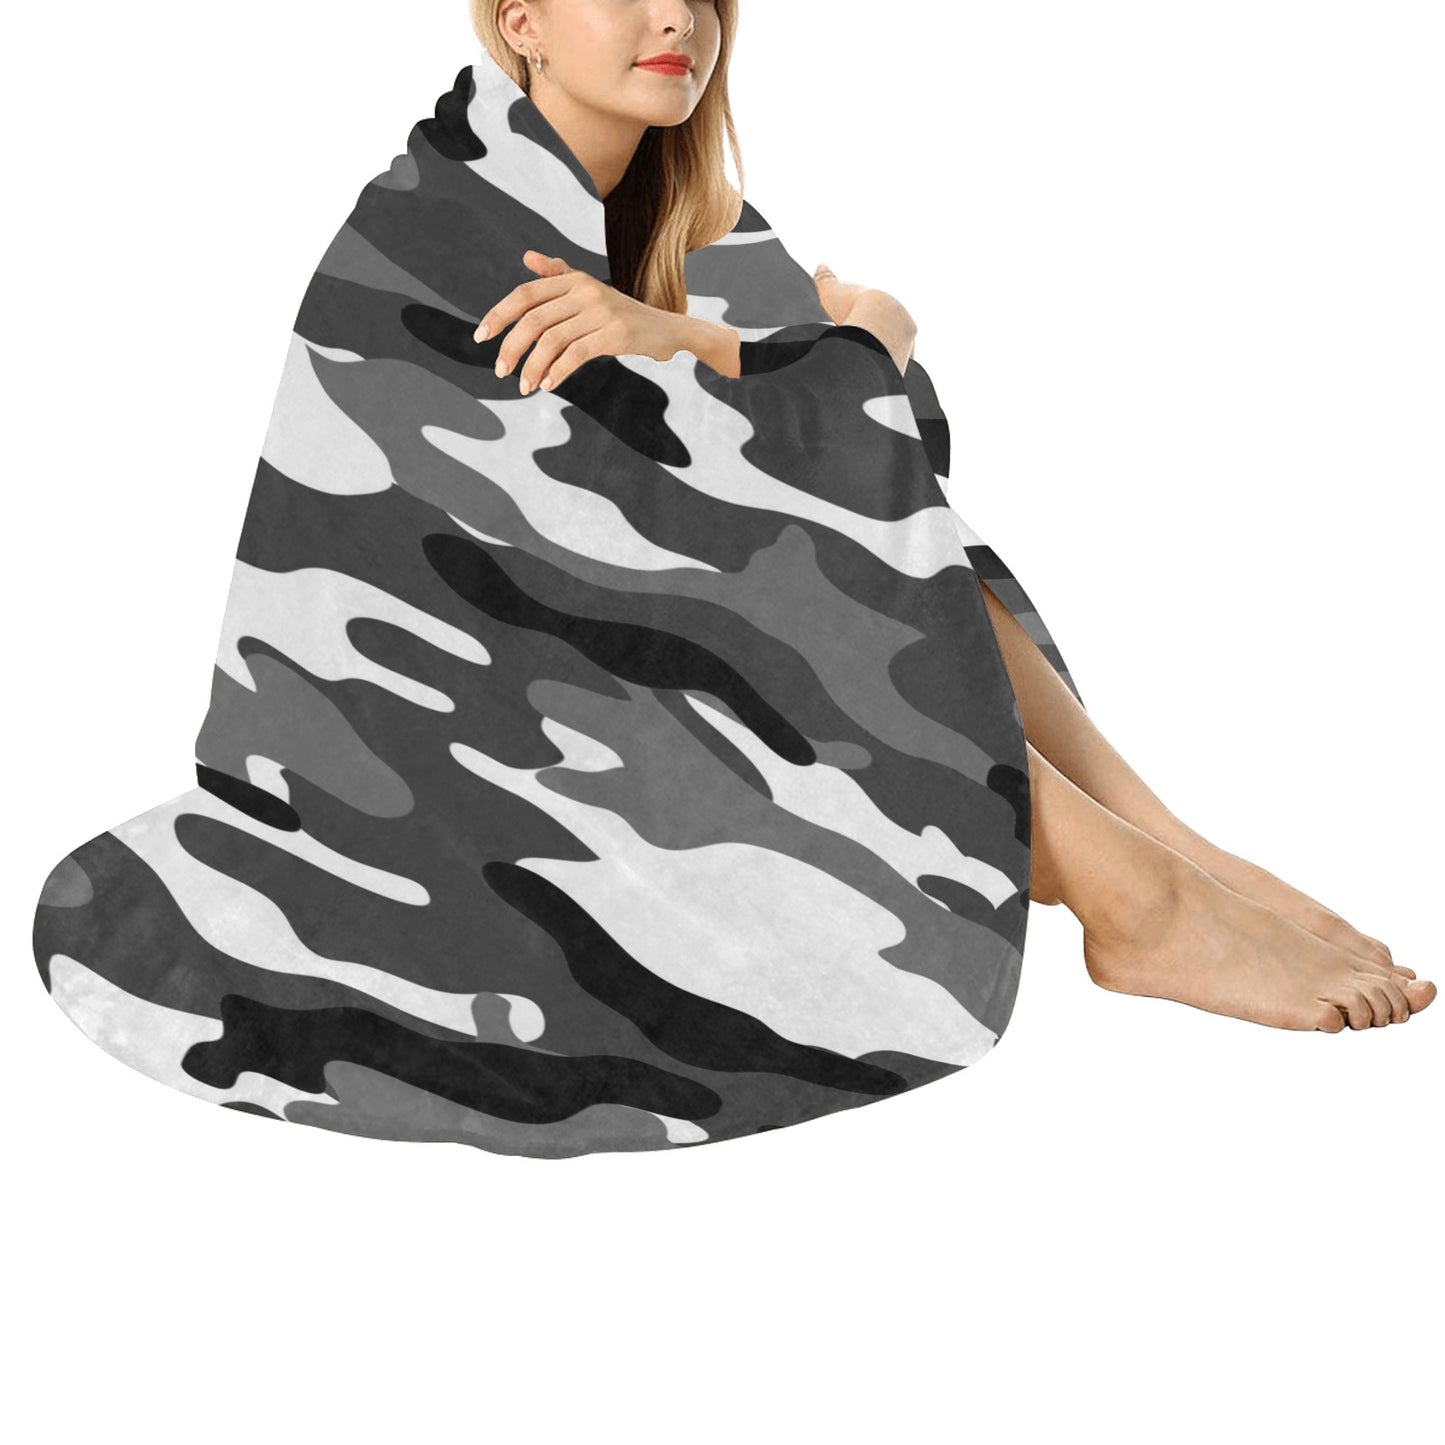 Giant Circular Ultra-Soft Micro Fleece Blanket 60"